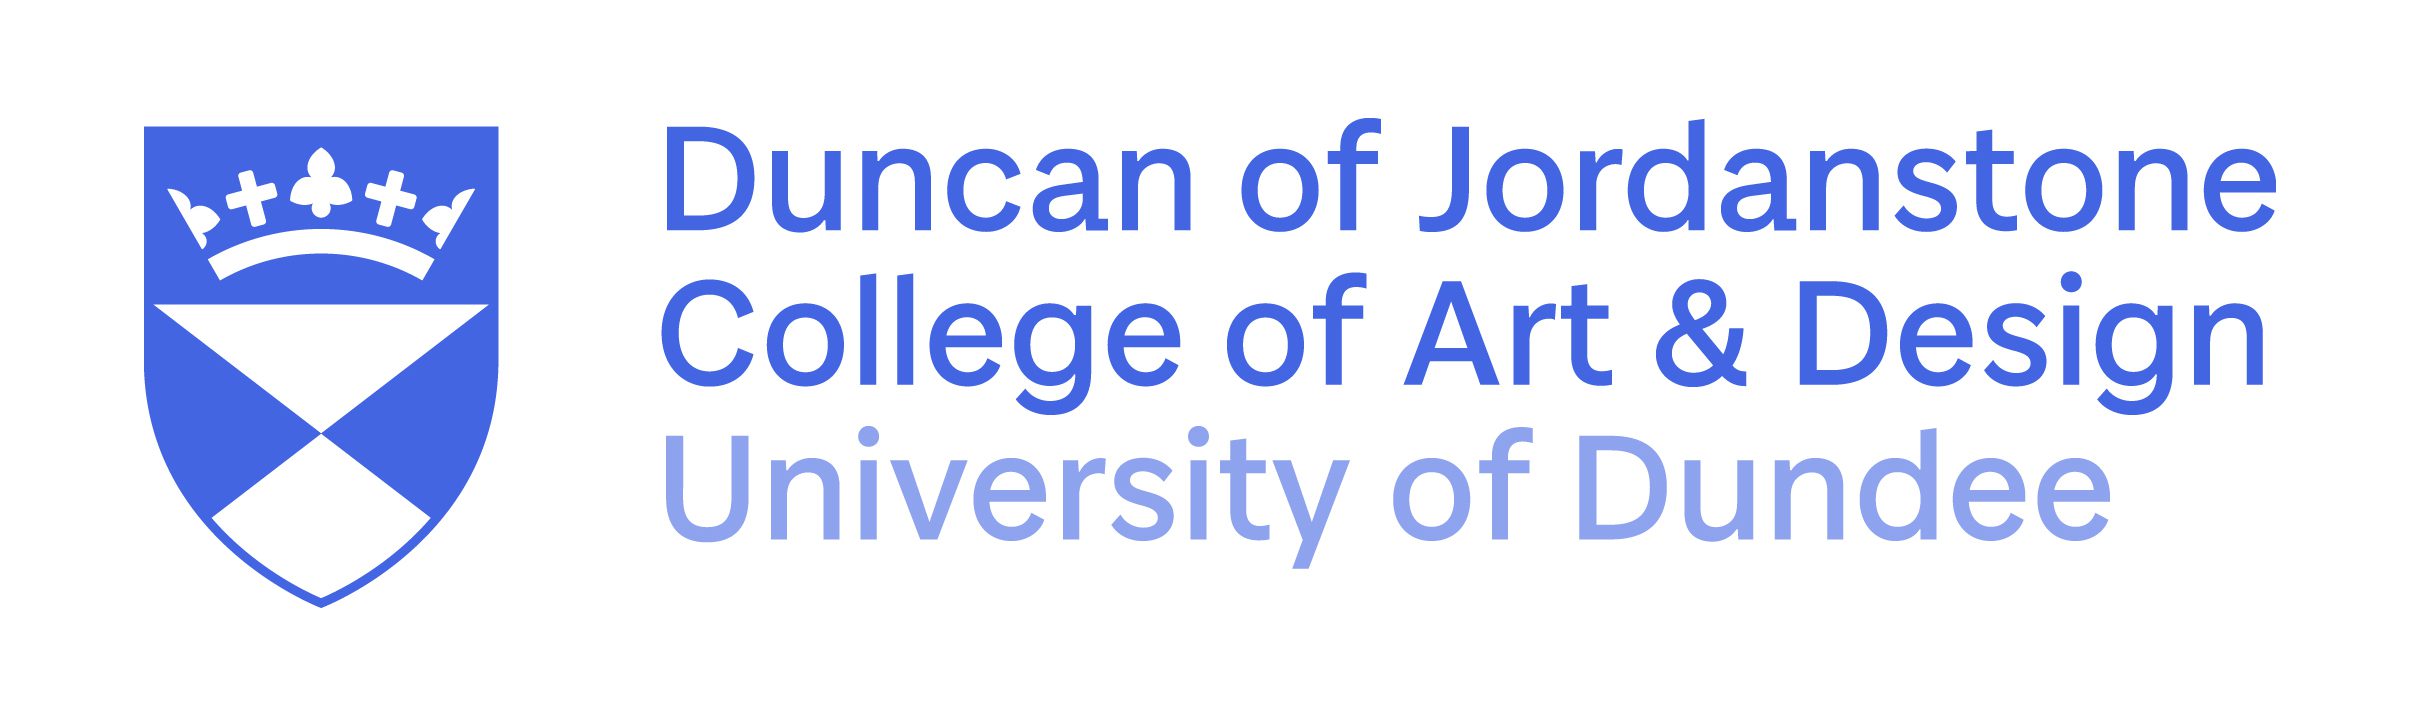 DJCAD University of Dundee